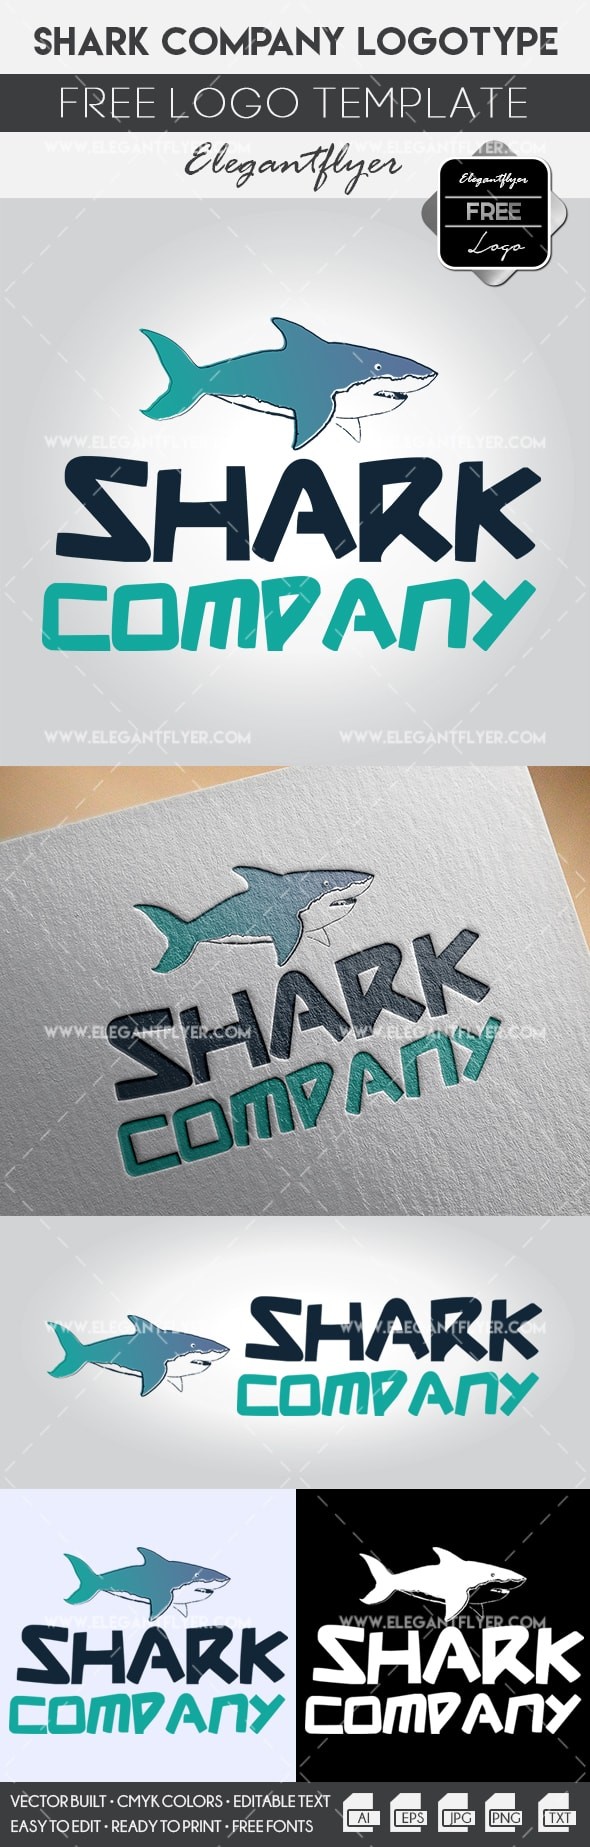 Shark Company --> Azienda Squalo by ElegantFlyer